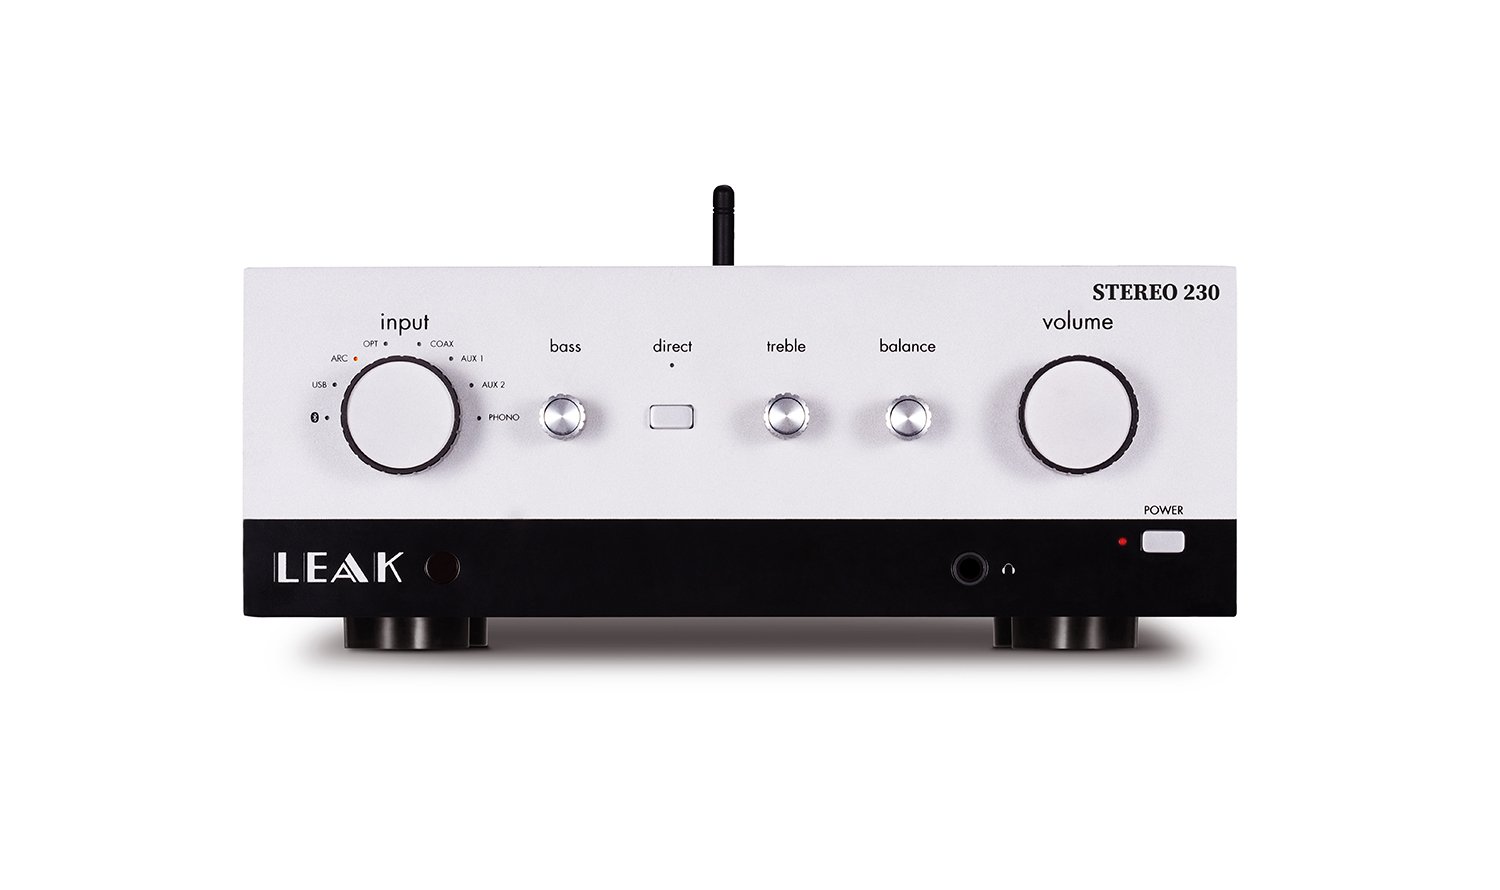 leak stereo 230 review